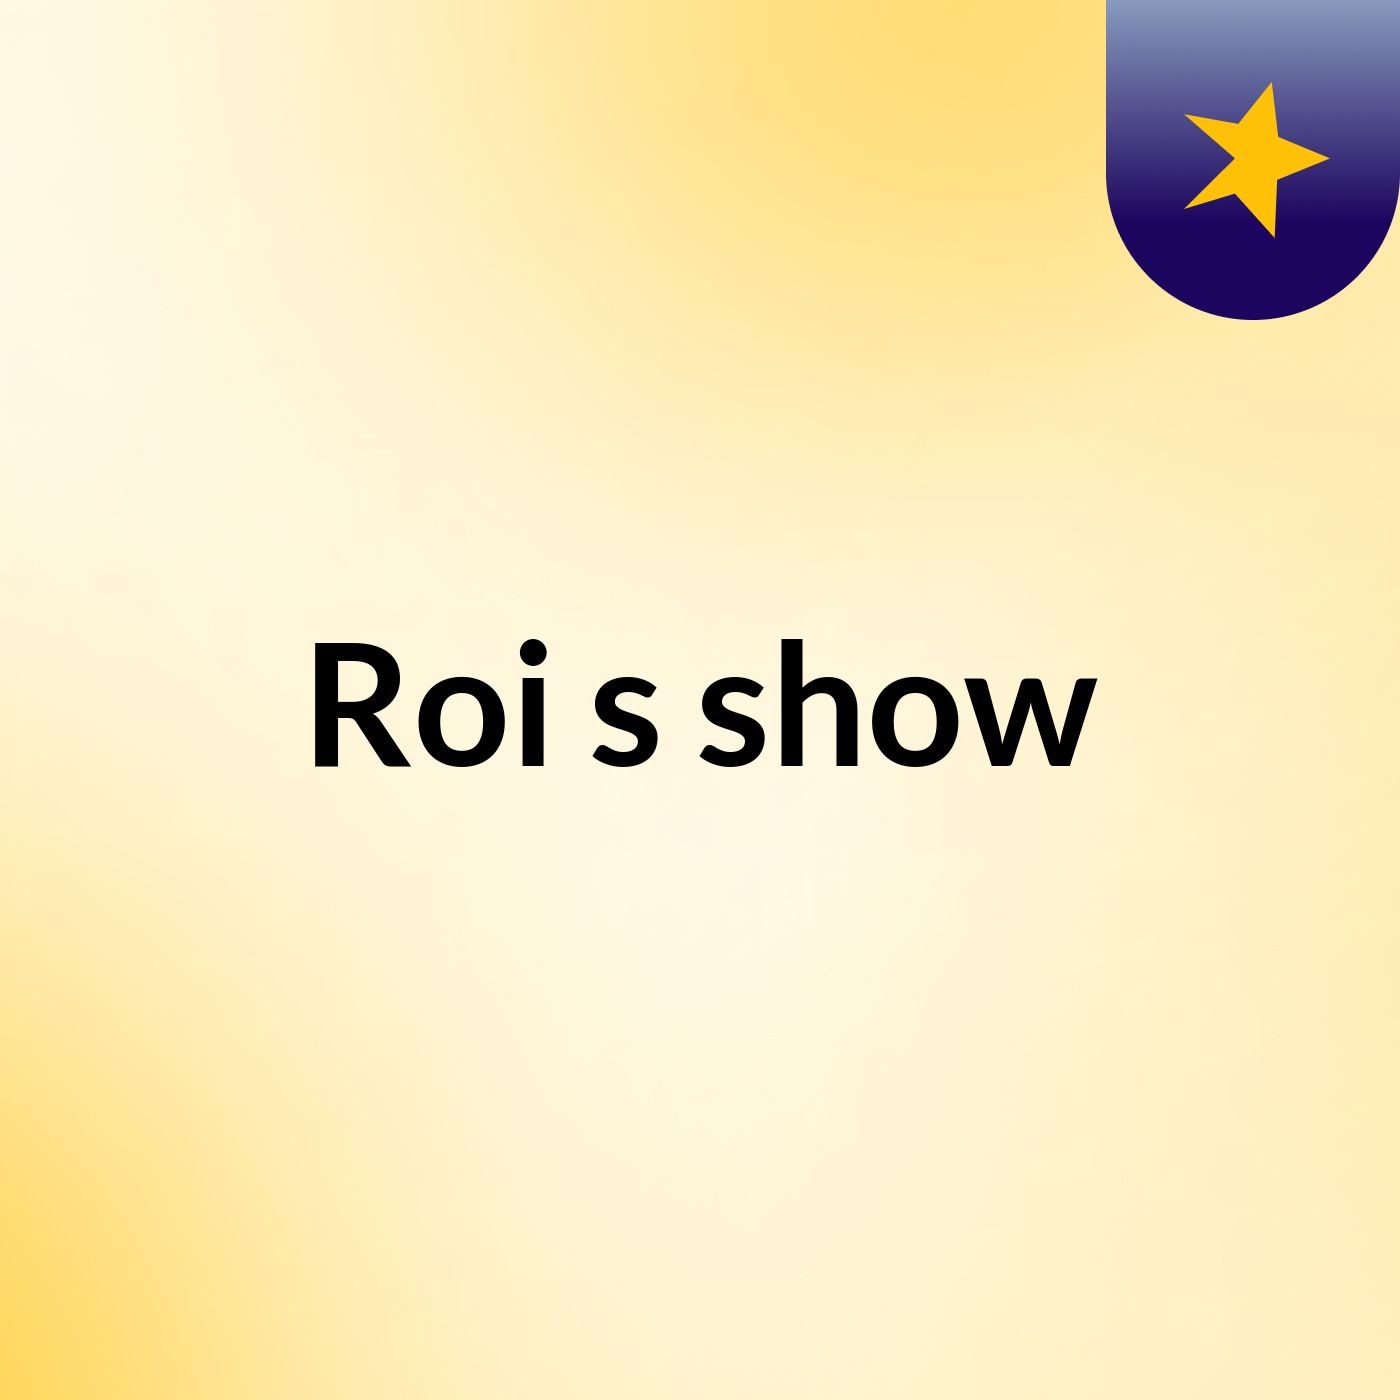 Roi's show